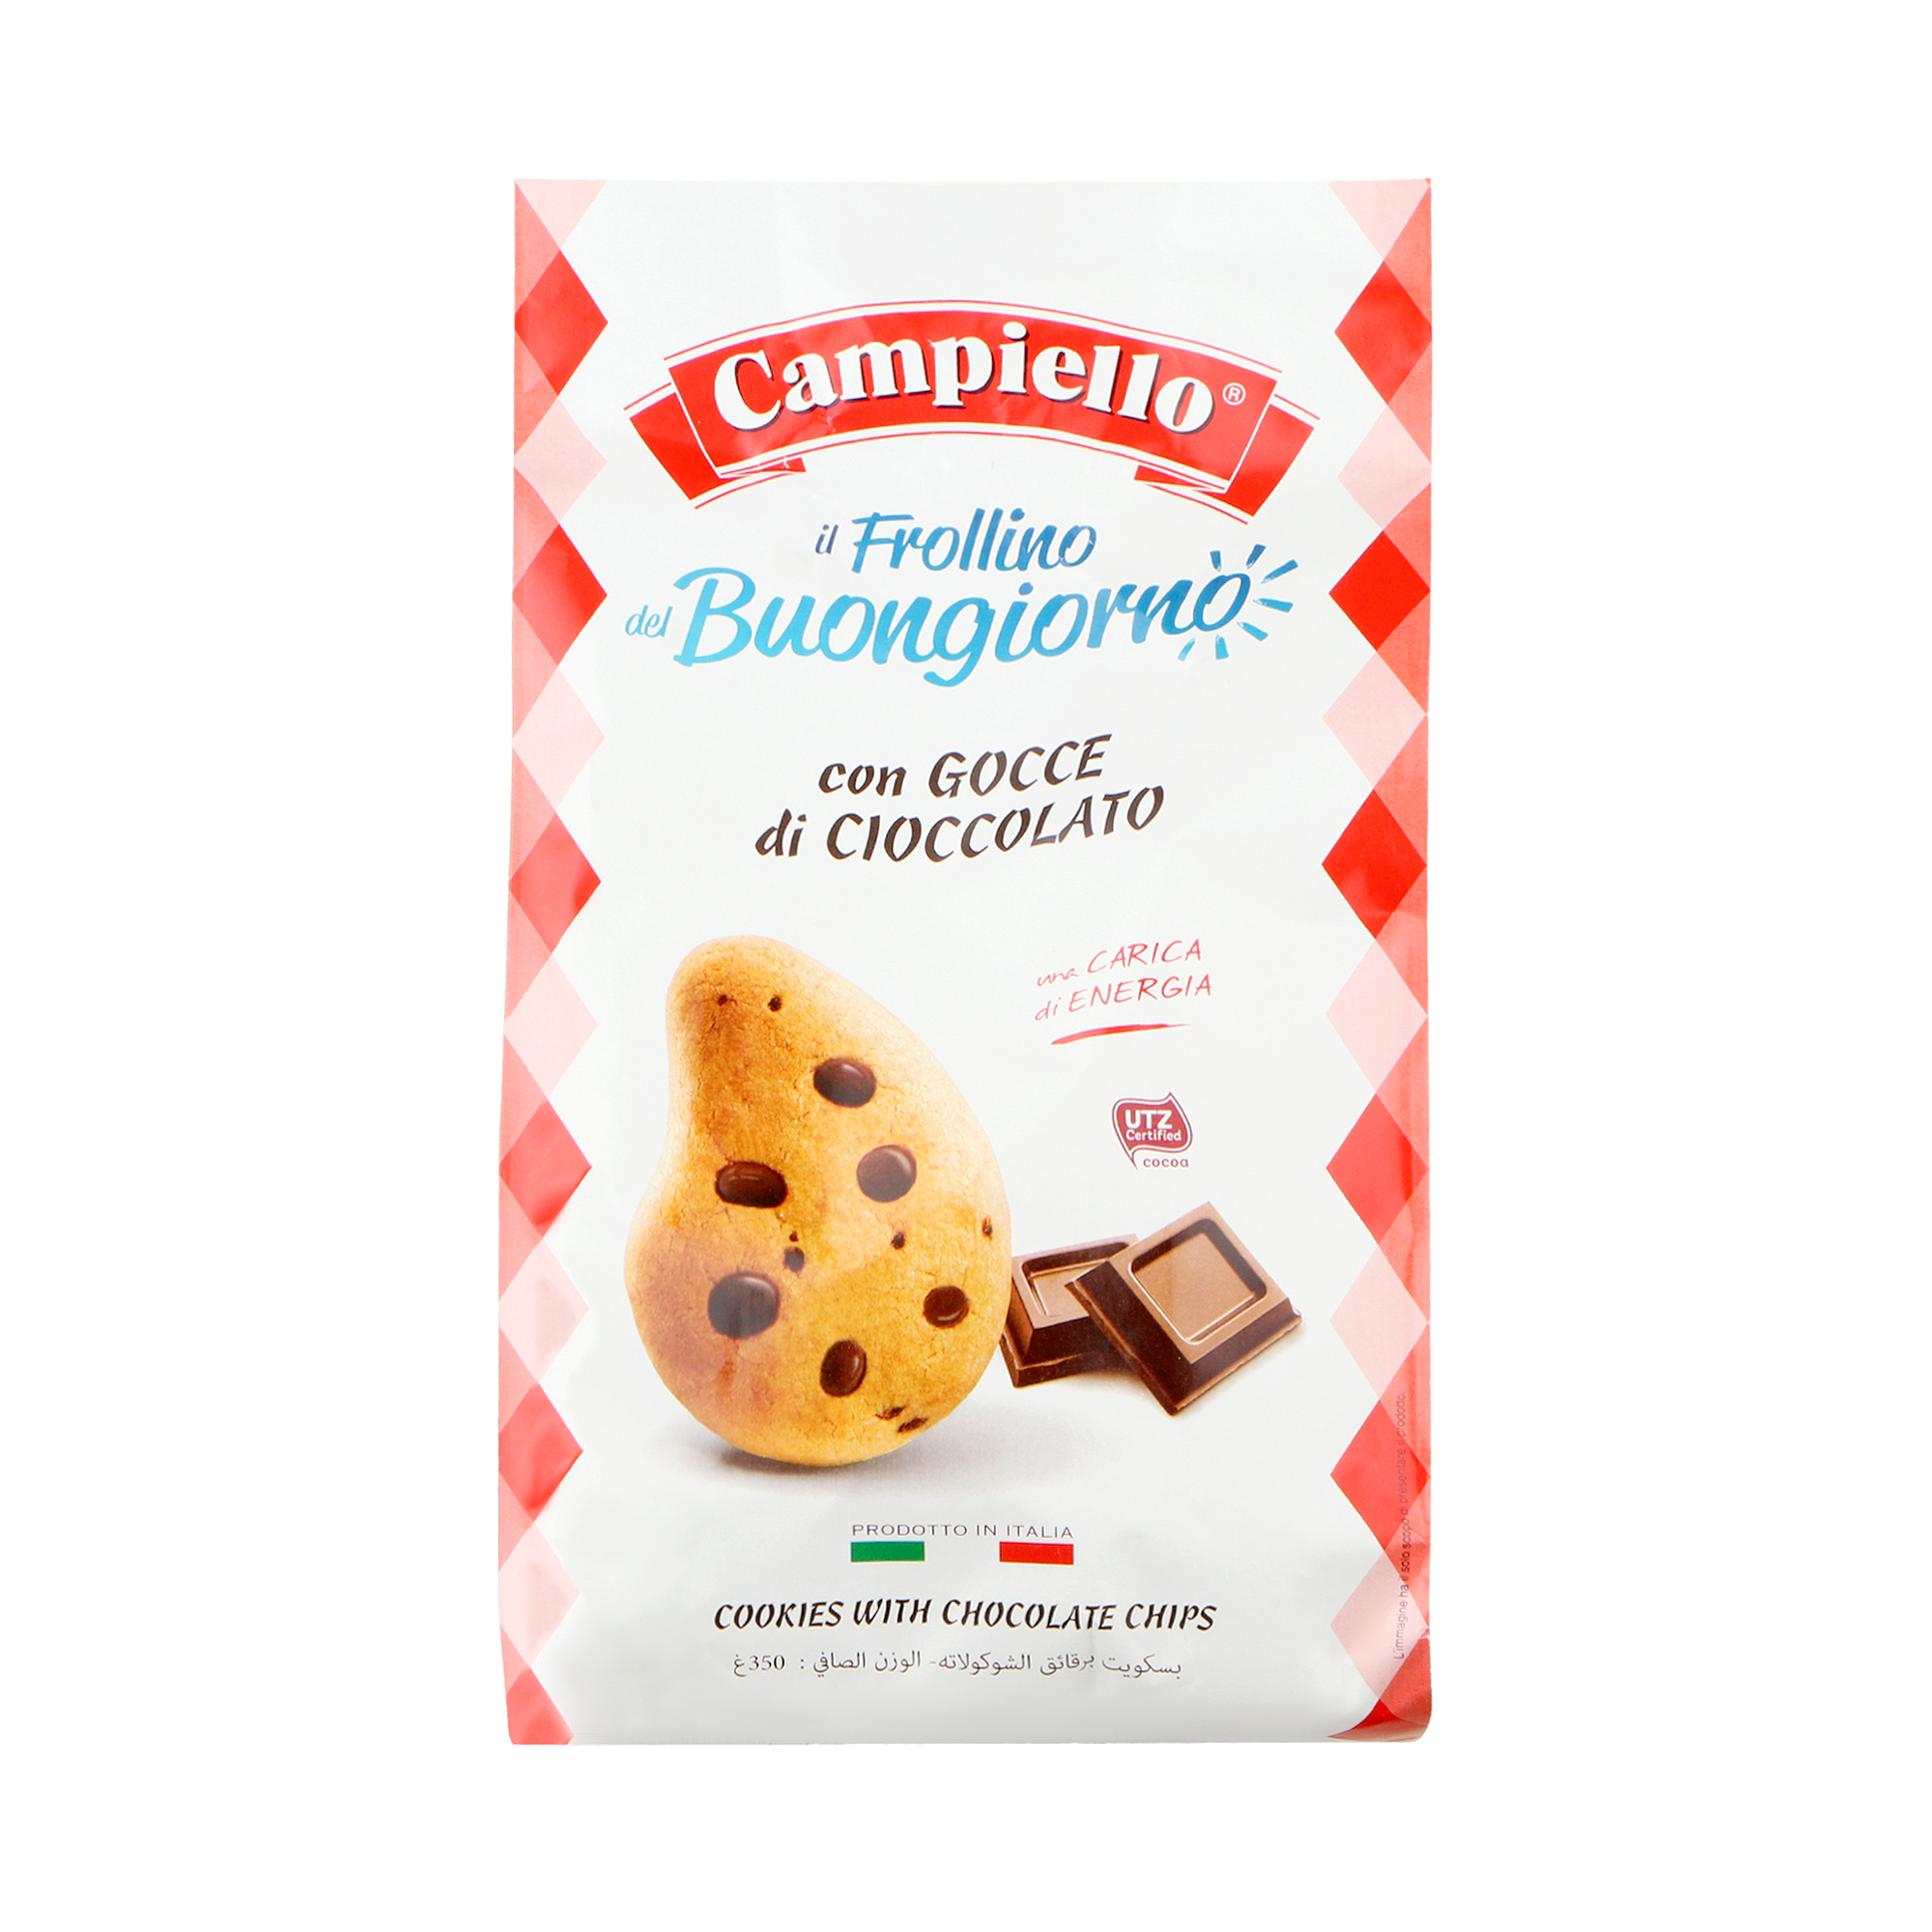 Печенье Campiello il Frollino del Buongiorno с шоколадом 350 г печенье campiello с шоколадом и лесными орехами 350 г